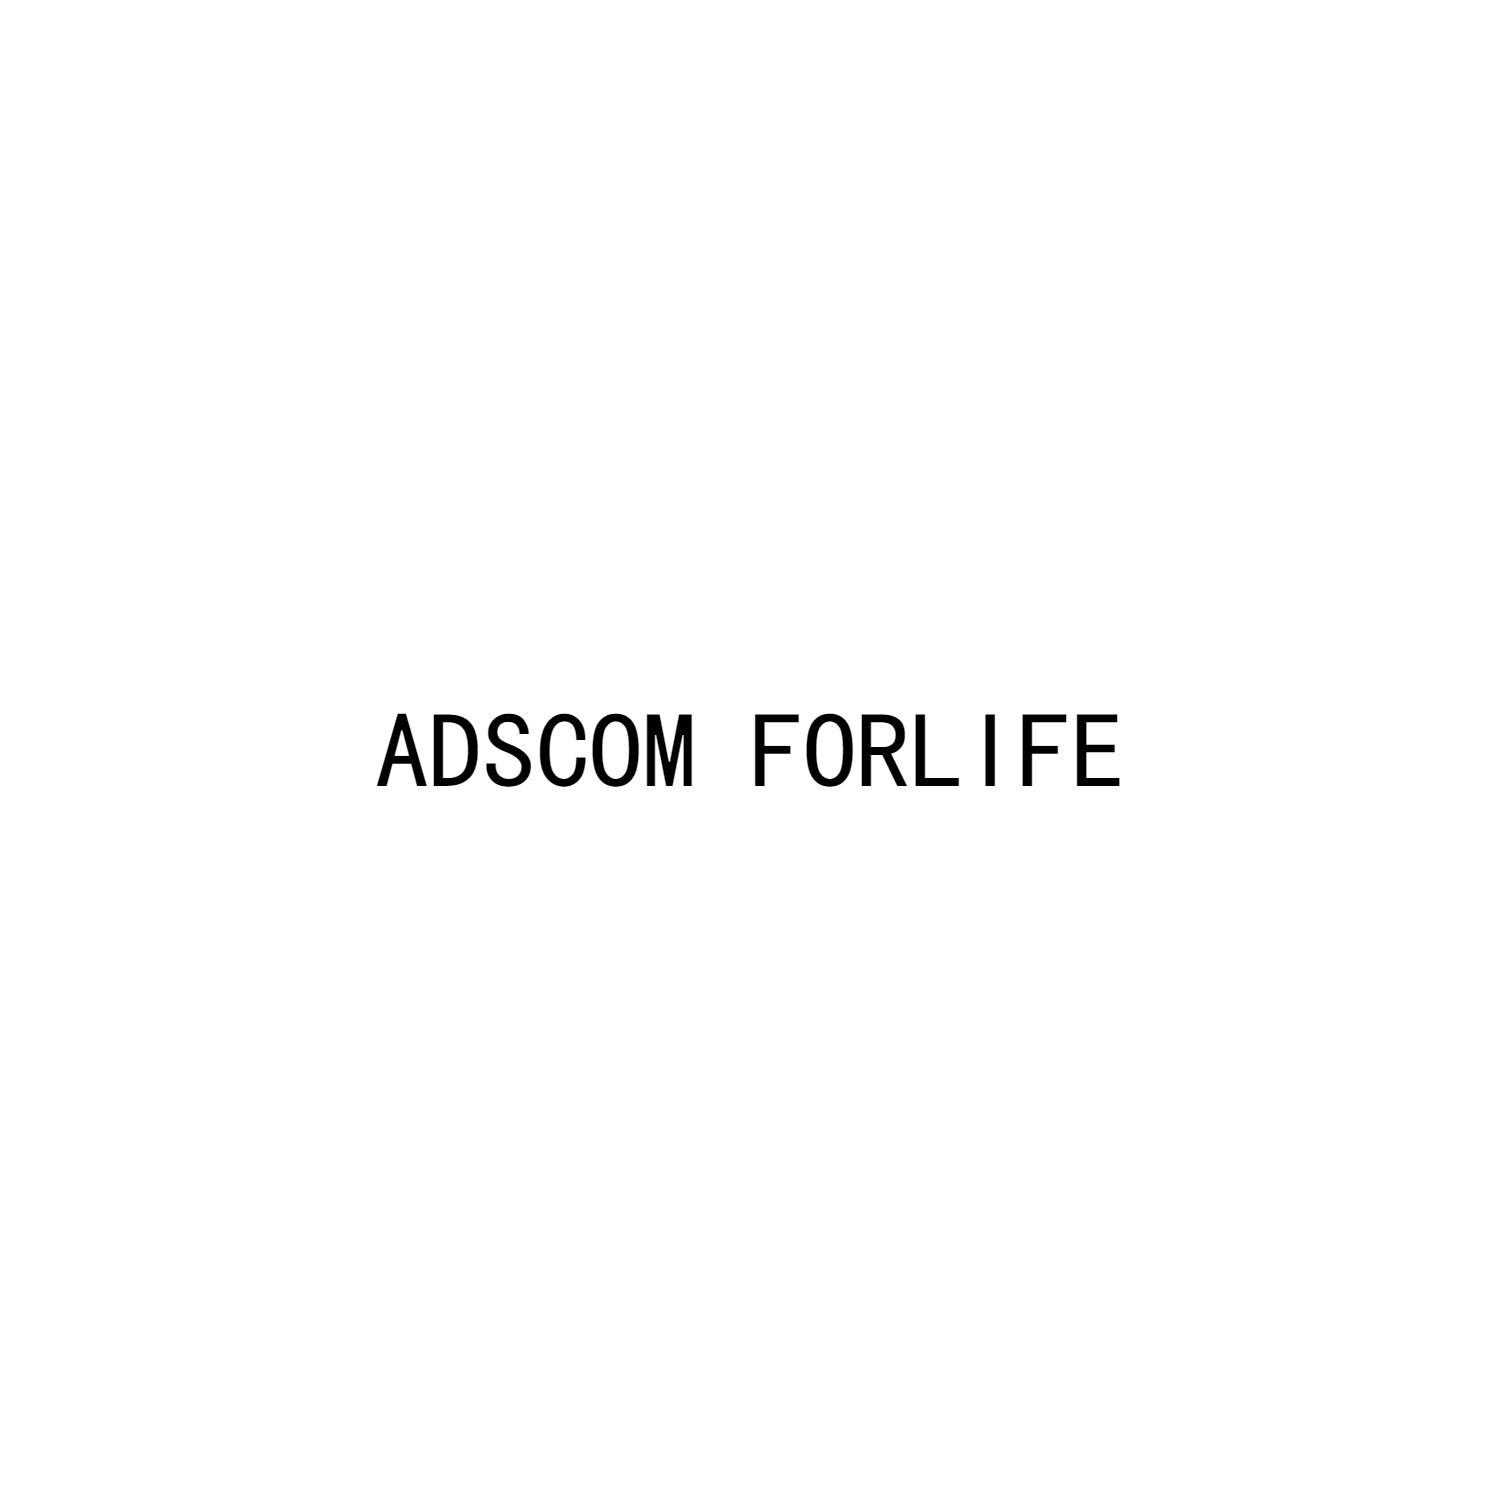 ADSCOM FORLIFE 商标公告